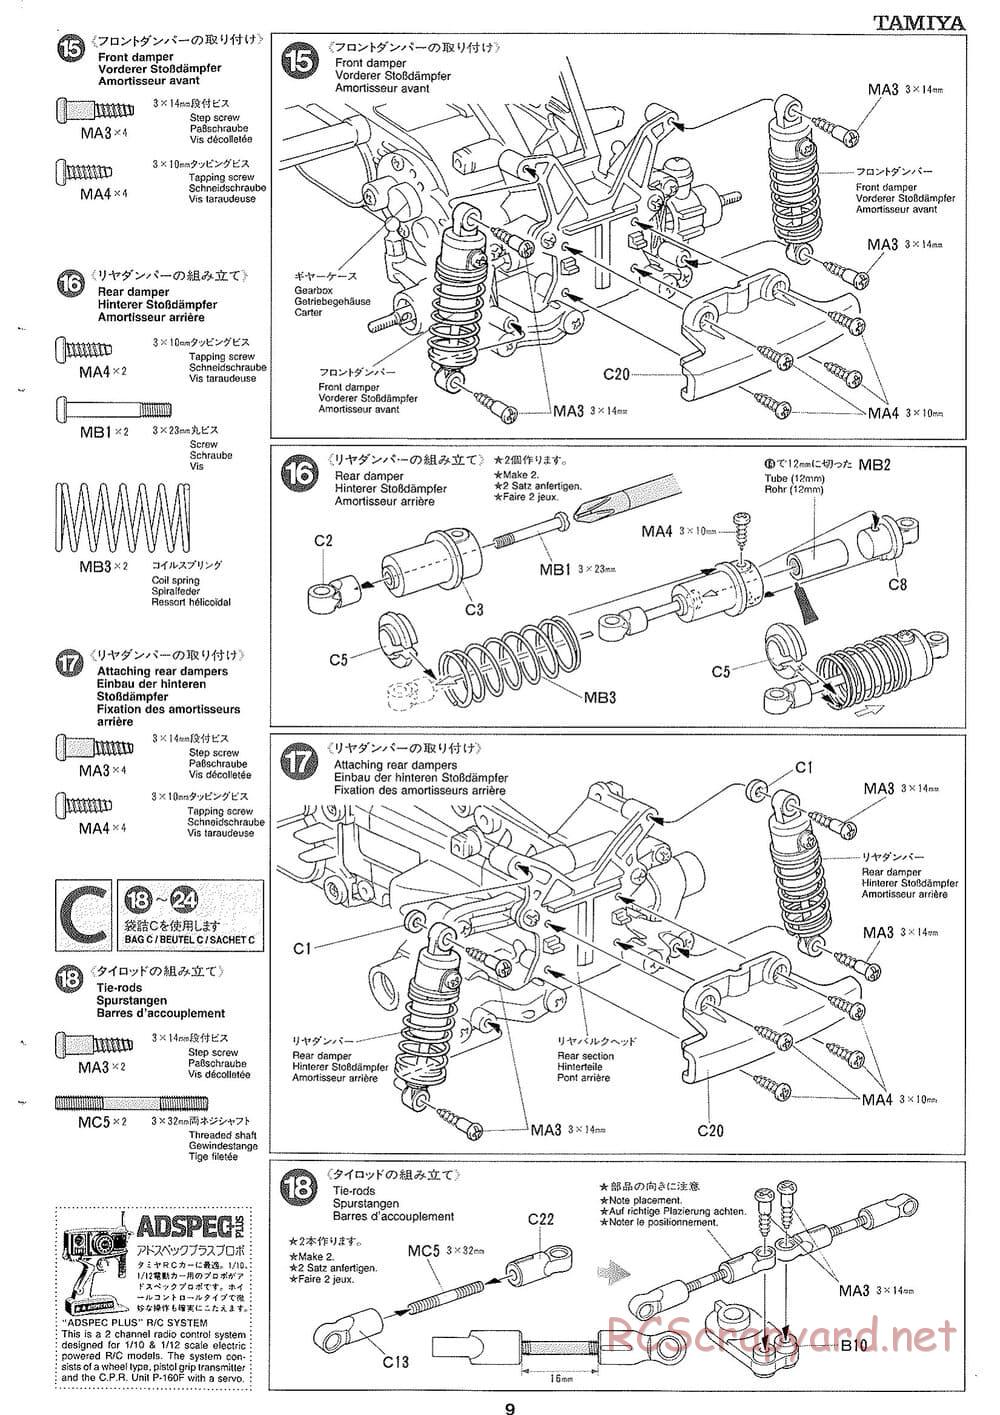 Tamiya - Rover Mini Cooper Racing - M03 Chassis - Manual - Page 9